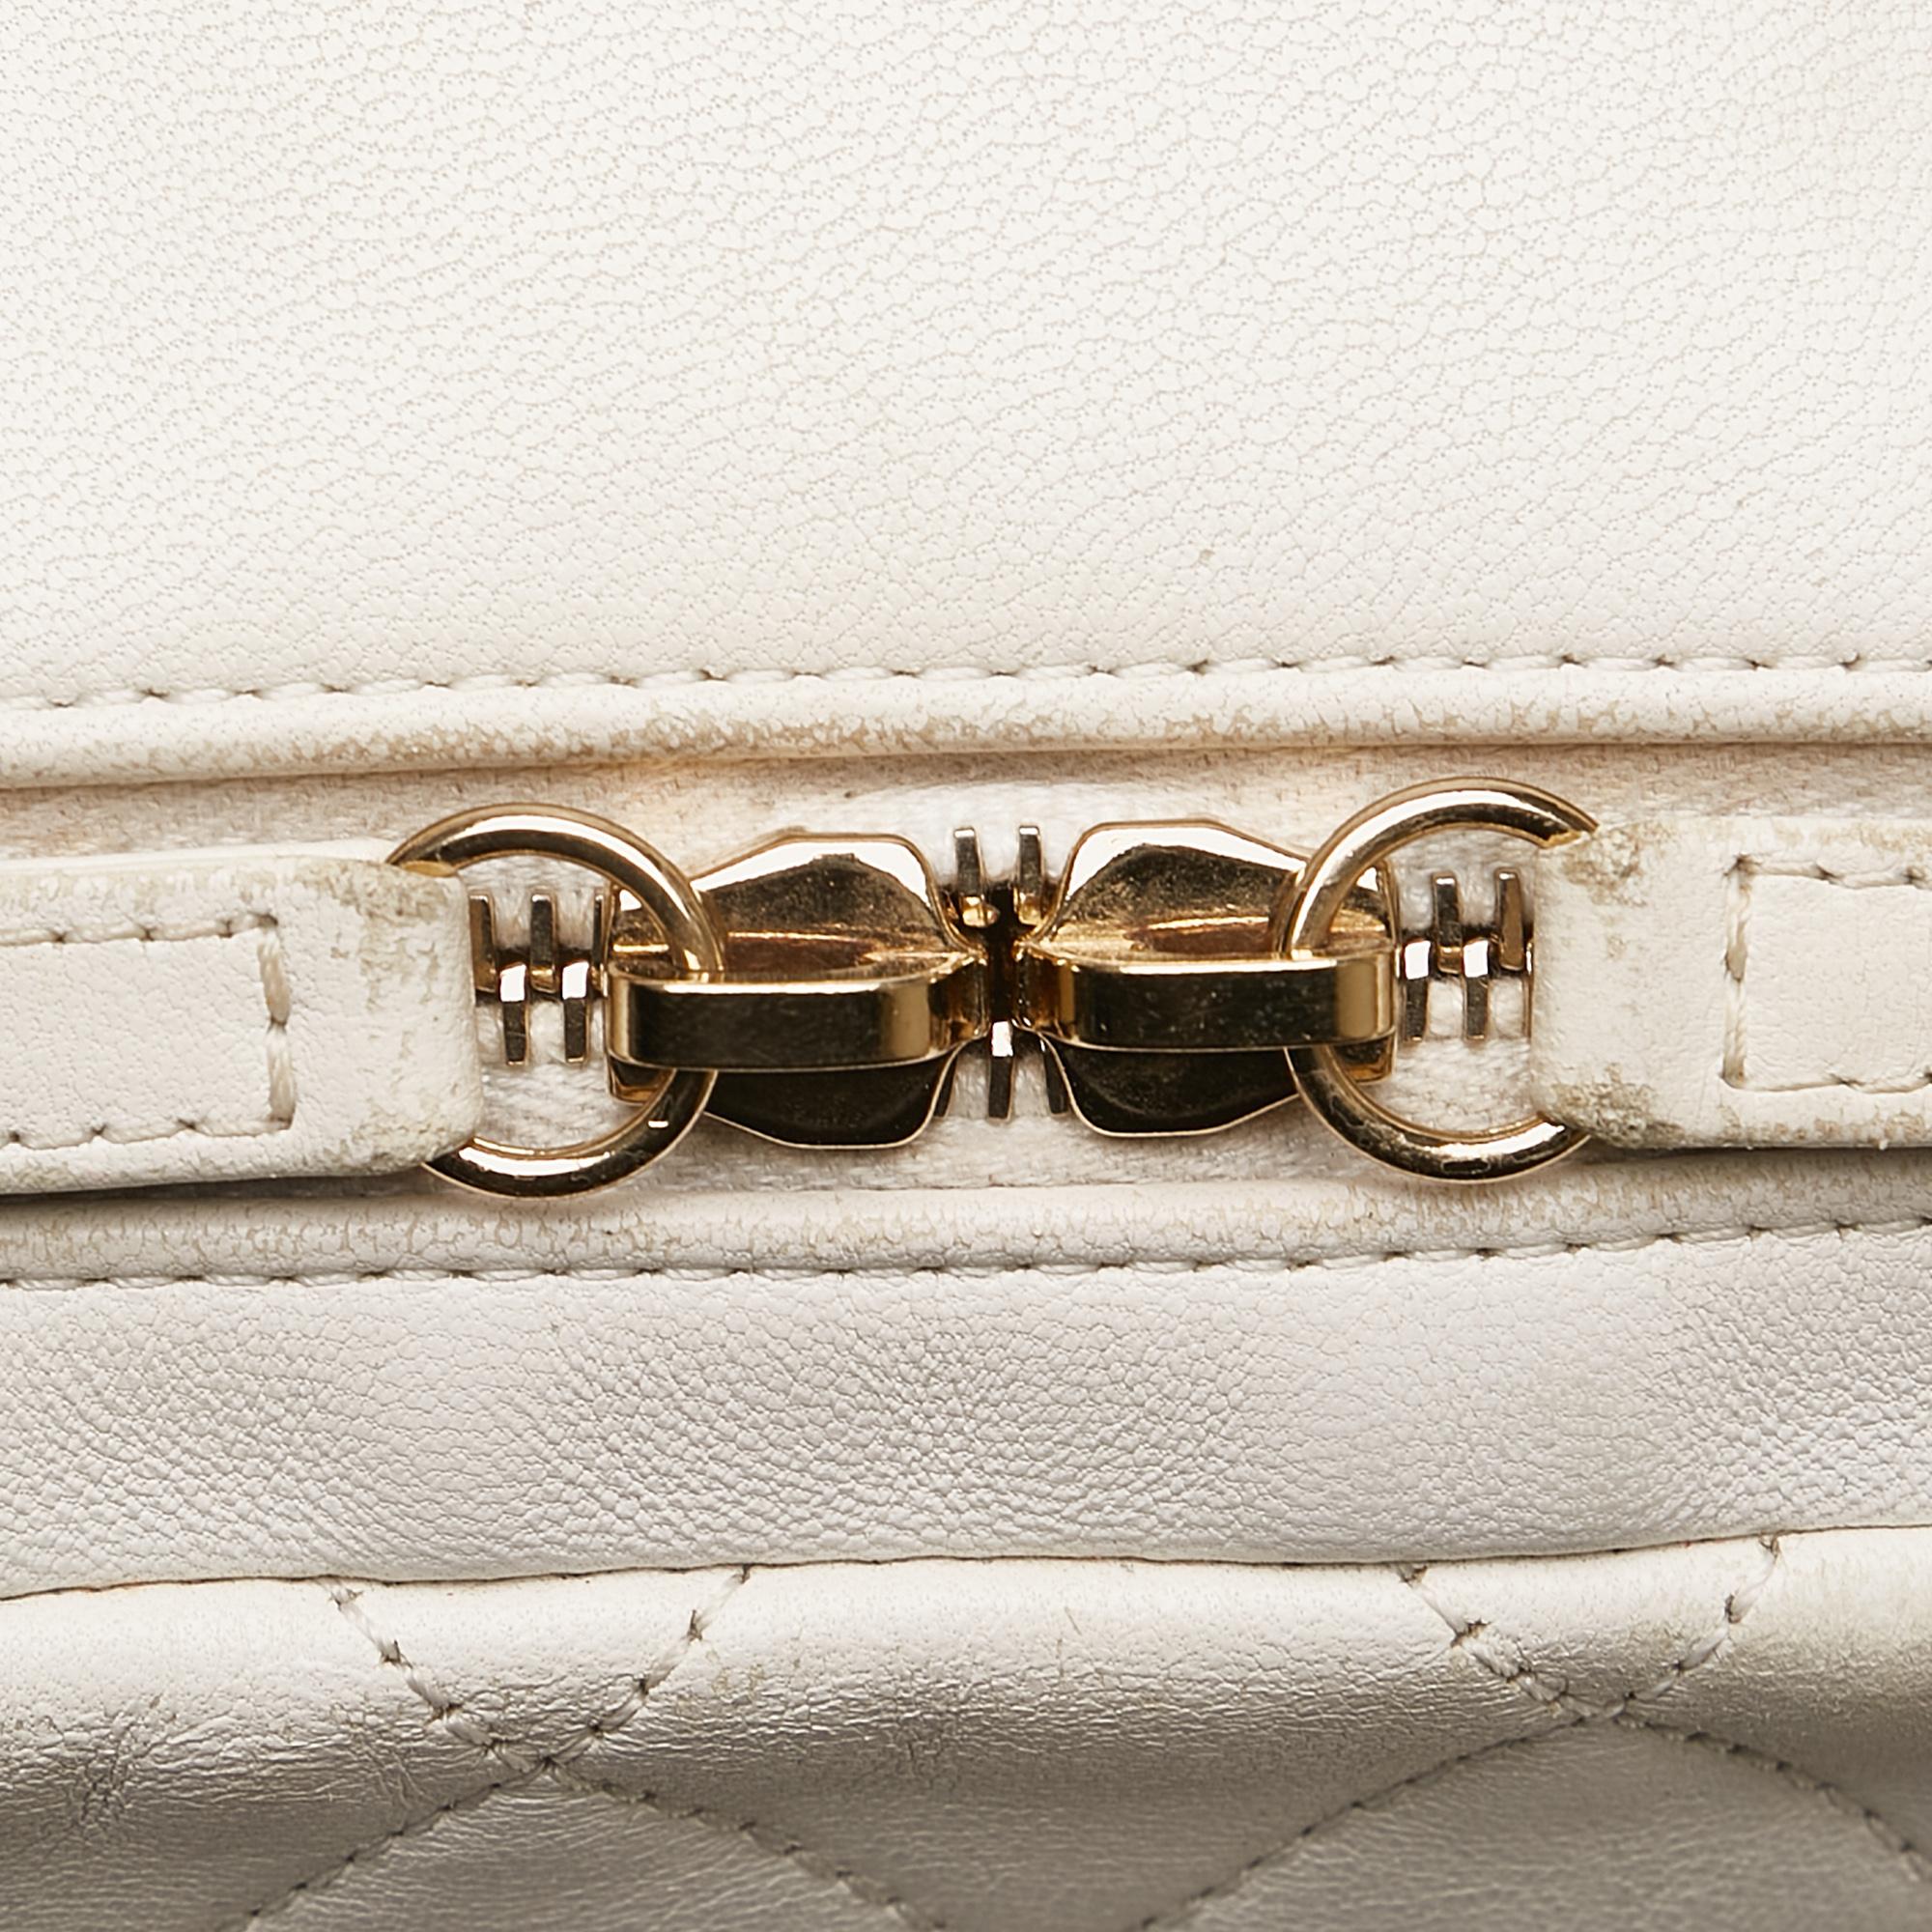 Chanel White Studded CC Camera Bag